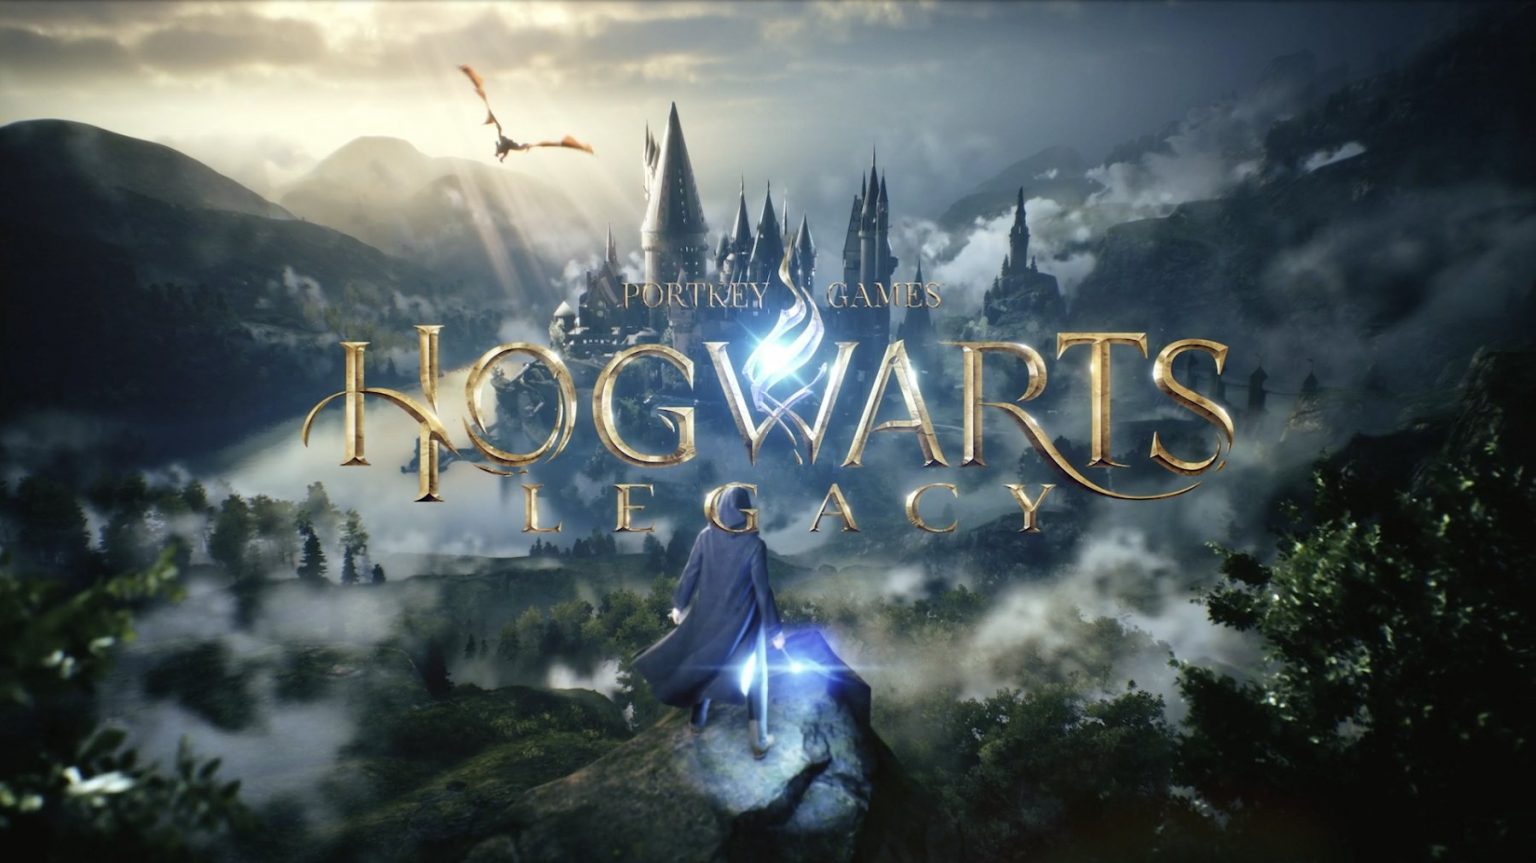 hogwarts legacy portkey games